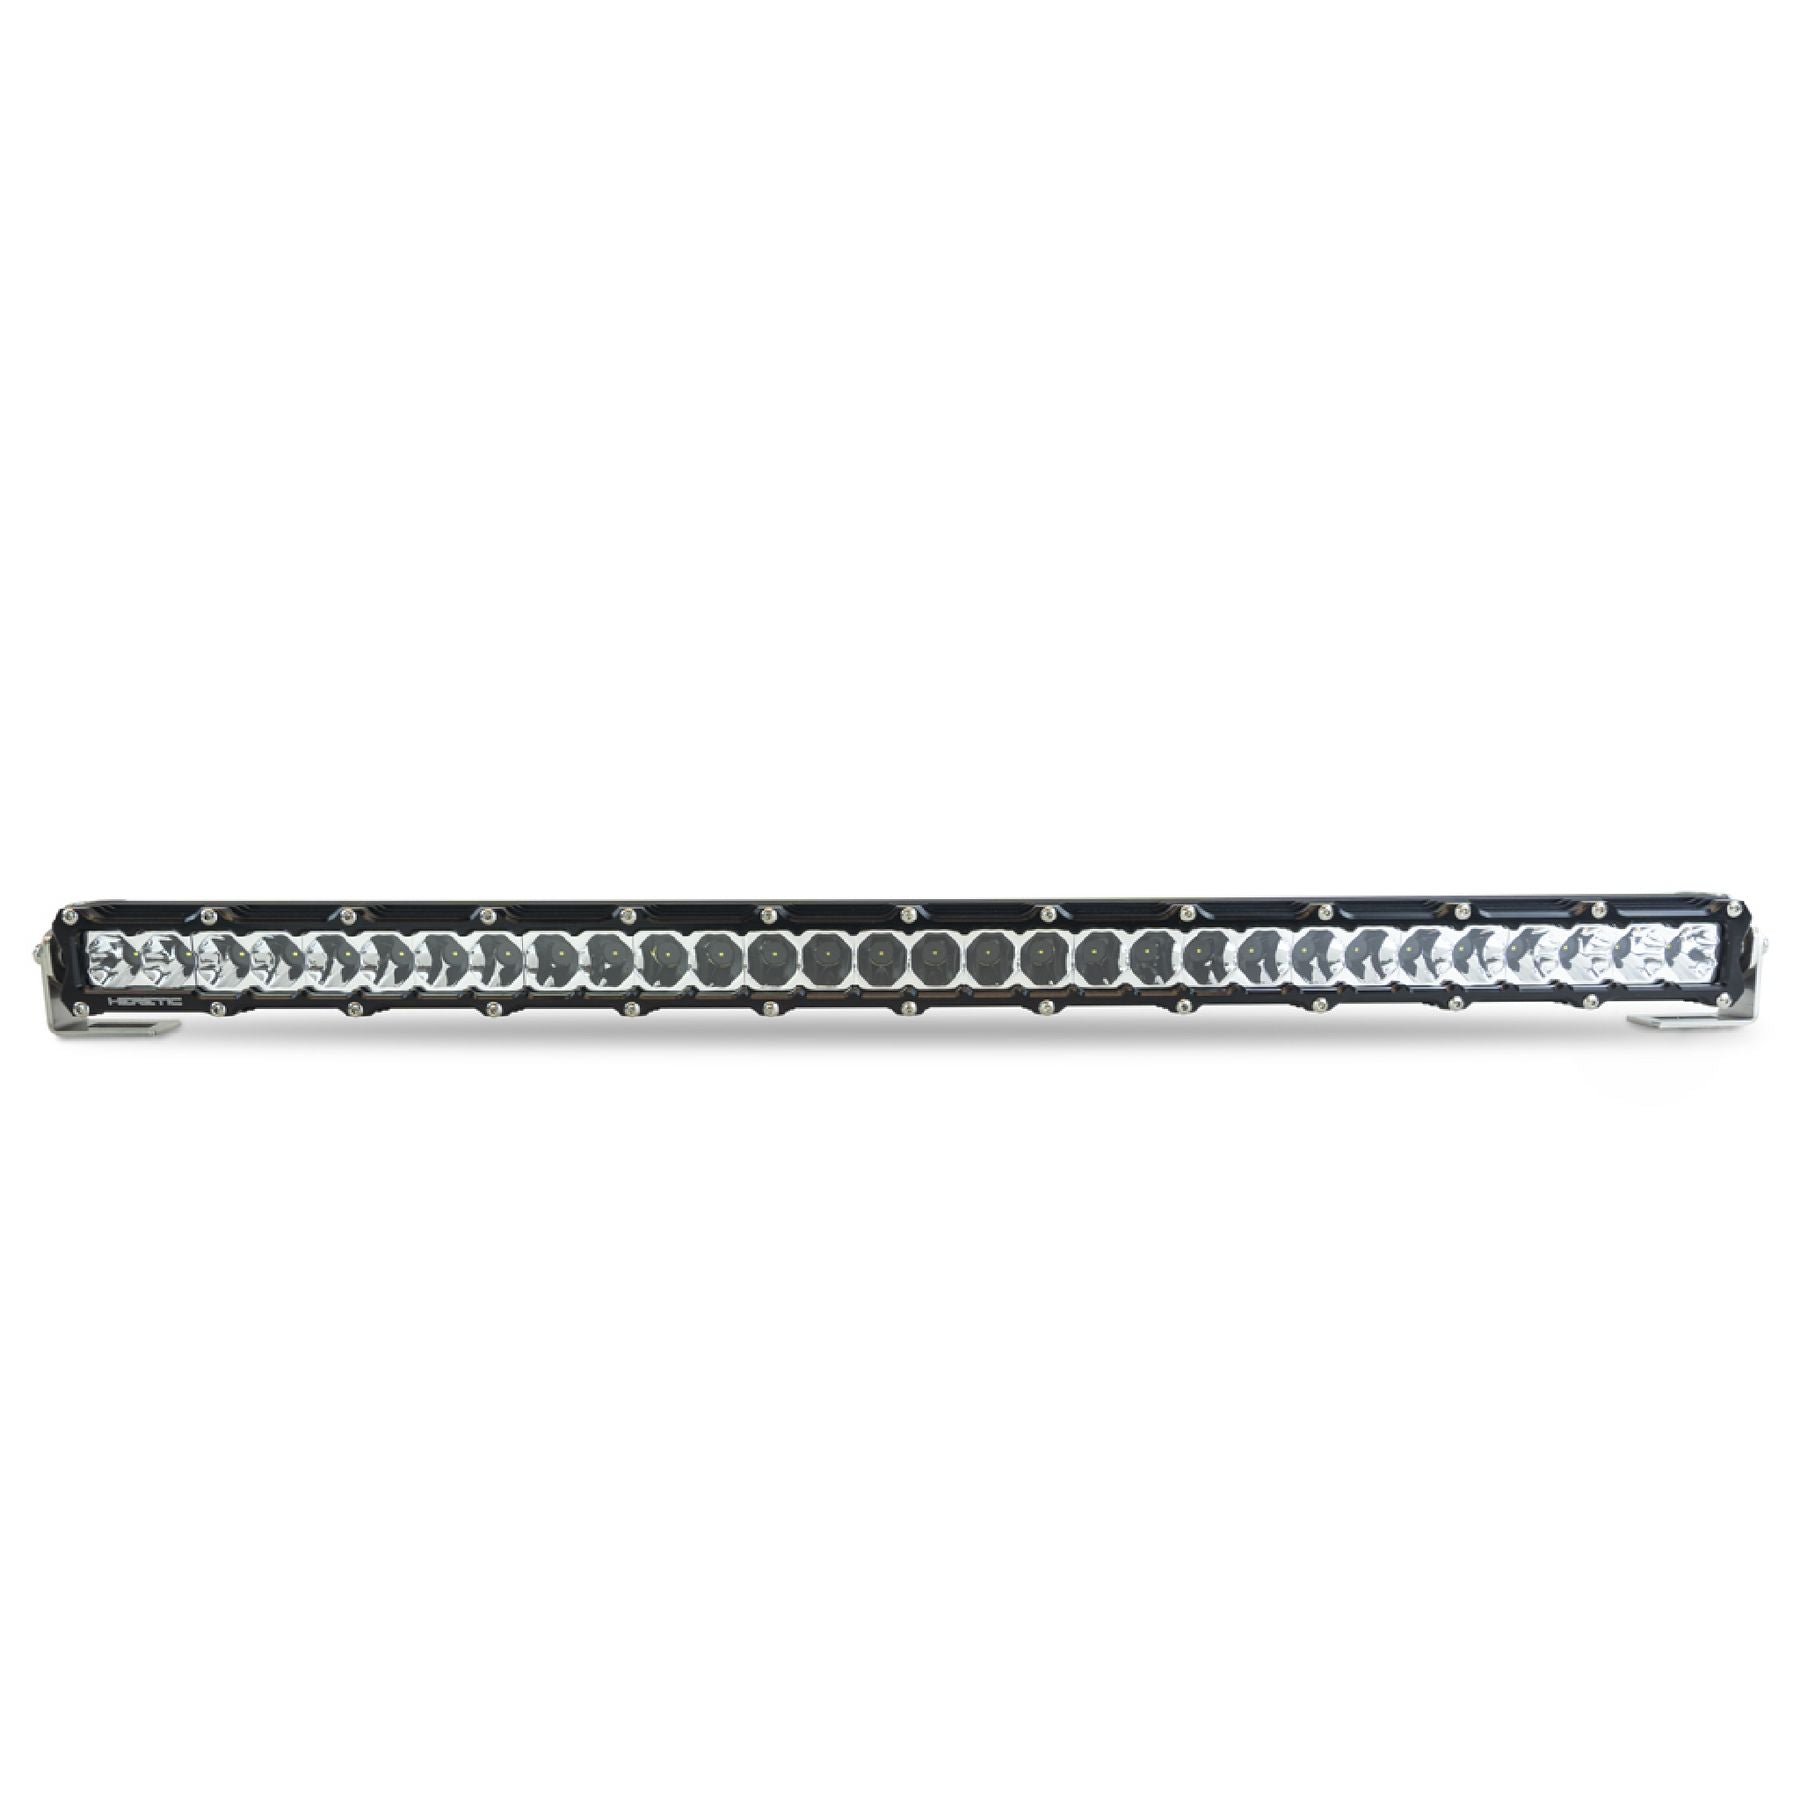 30" LED LIGHT BAR-Light Bar-Heretic Studio-Combo-Wiring Harness: 30" and Below for Single Light Bar (up to 180W) + $49.99-Black Market UTV